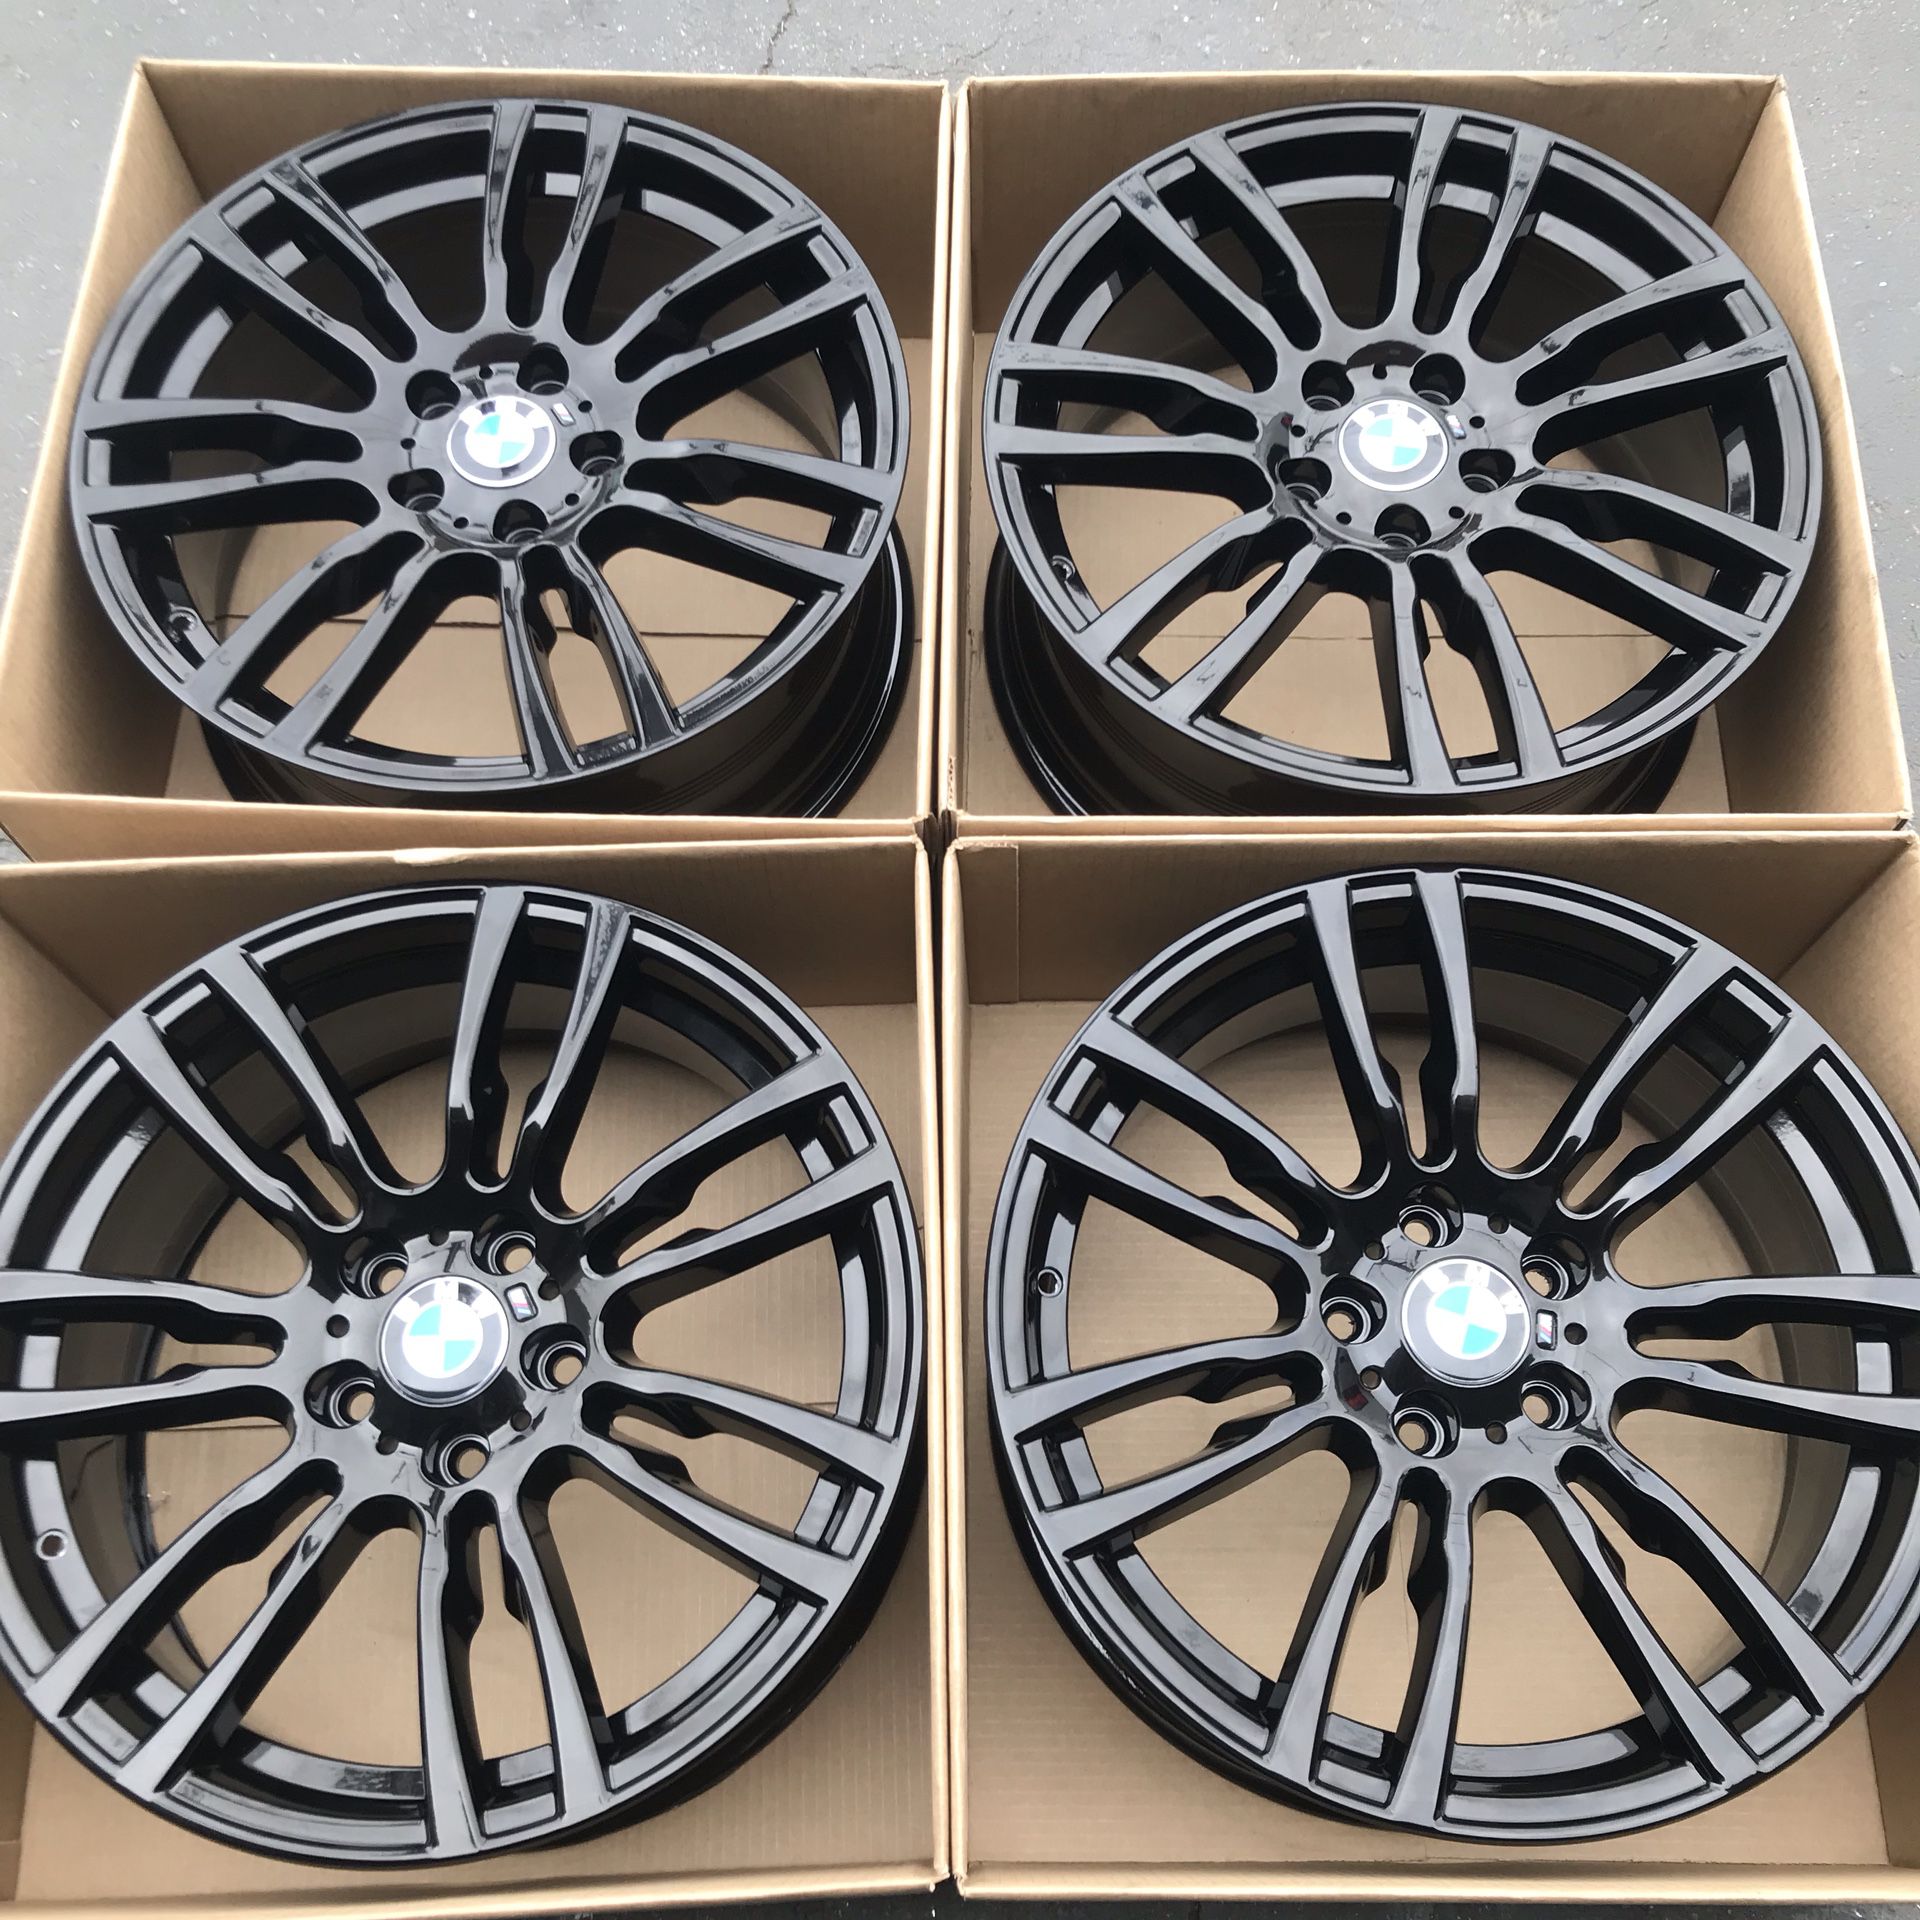 19” oem staggered BMW 328i factory wheels 19” inch gloss black rims 3 series 335i 340i bmw